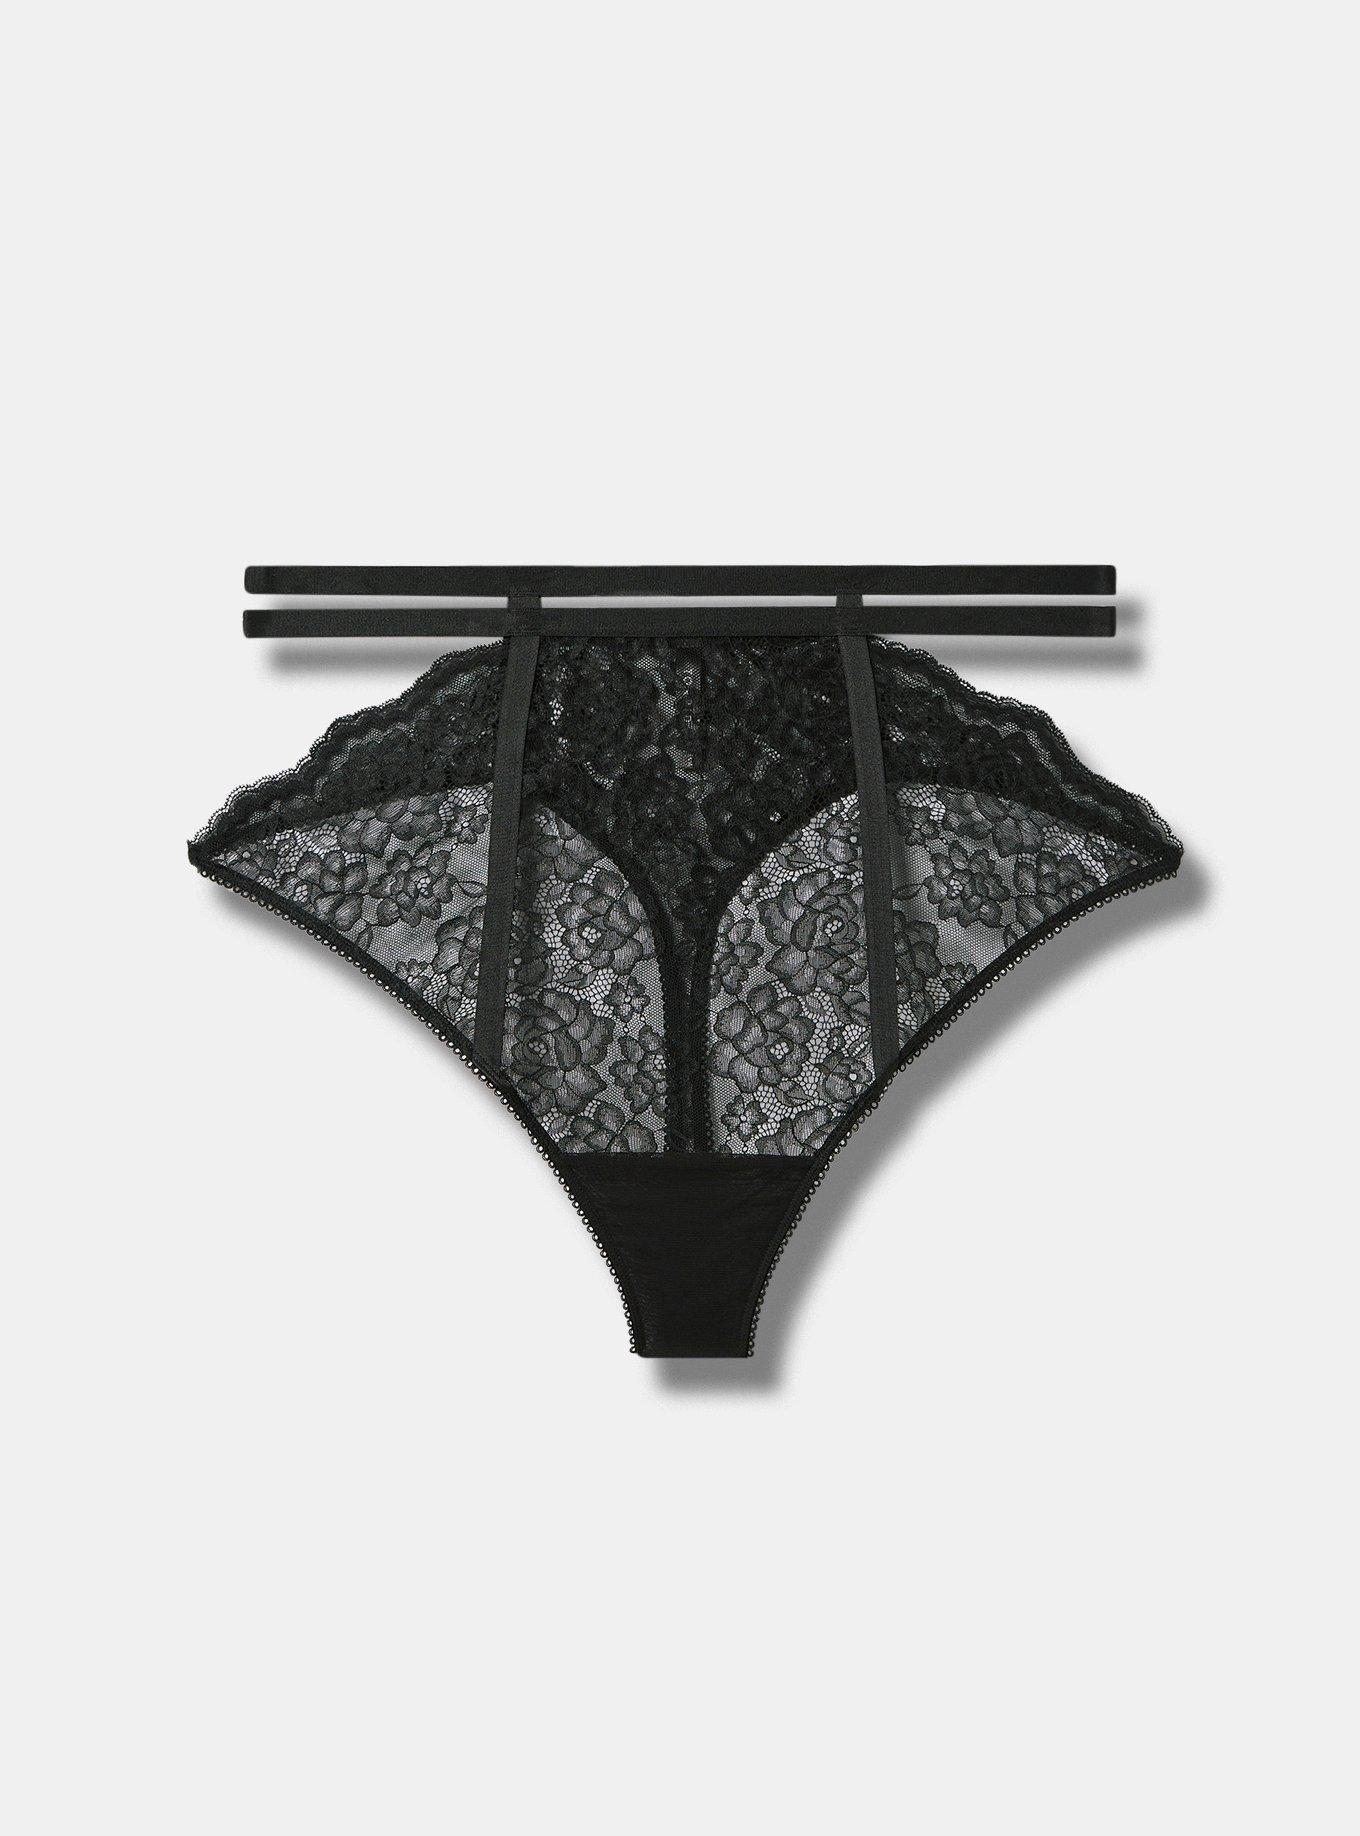 Torrid Black High Waist Cutout Back Lace Thong Panty Plus Size 2X